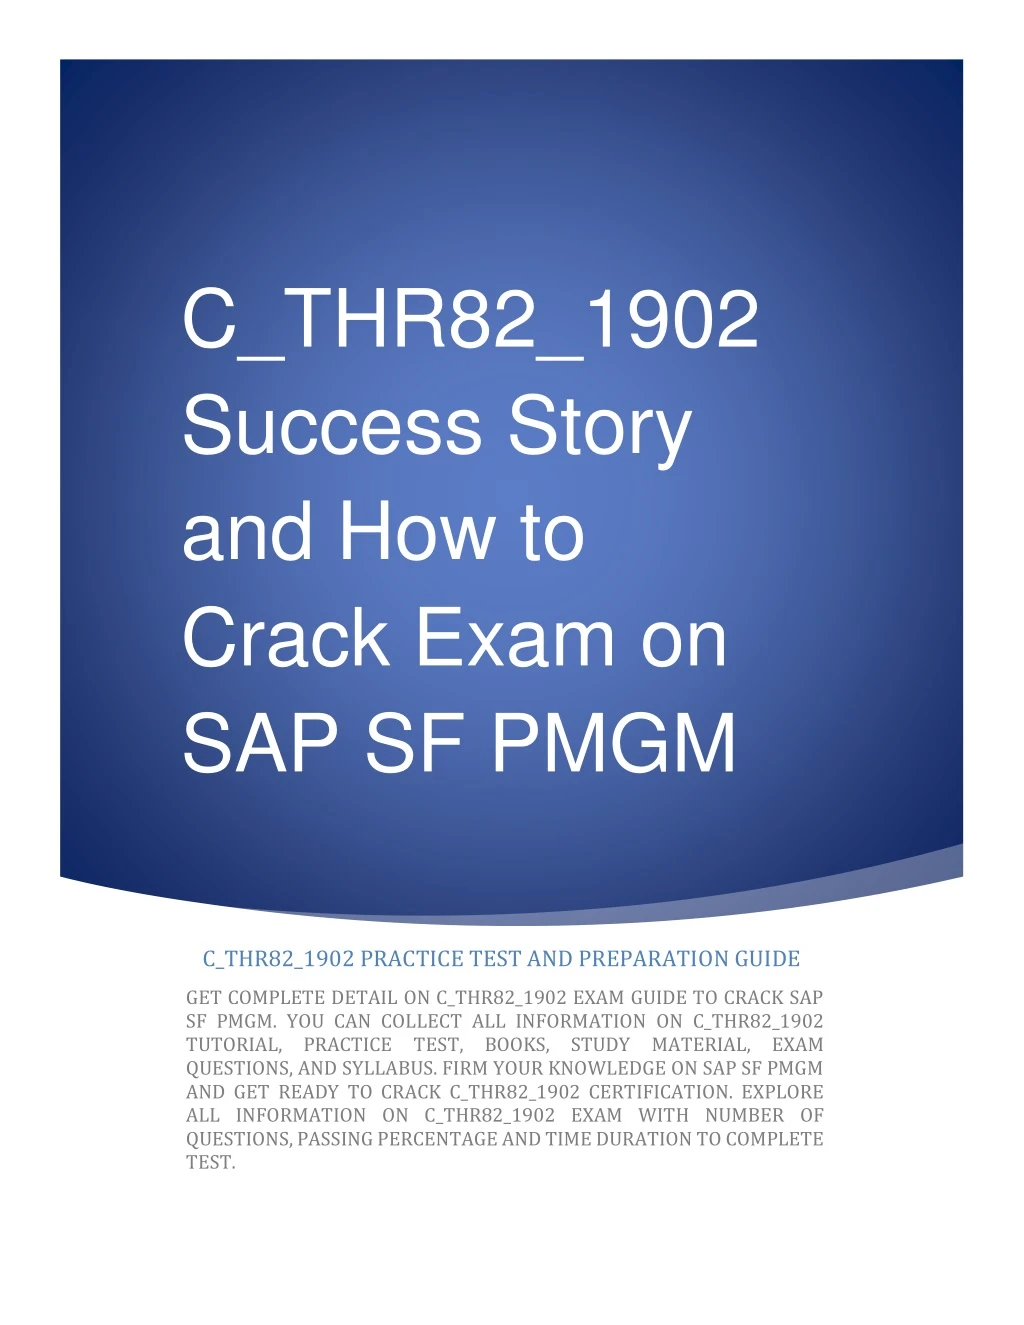 c thr82 1902 success story and how to crack exam